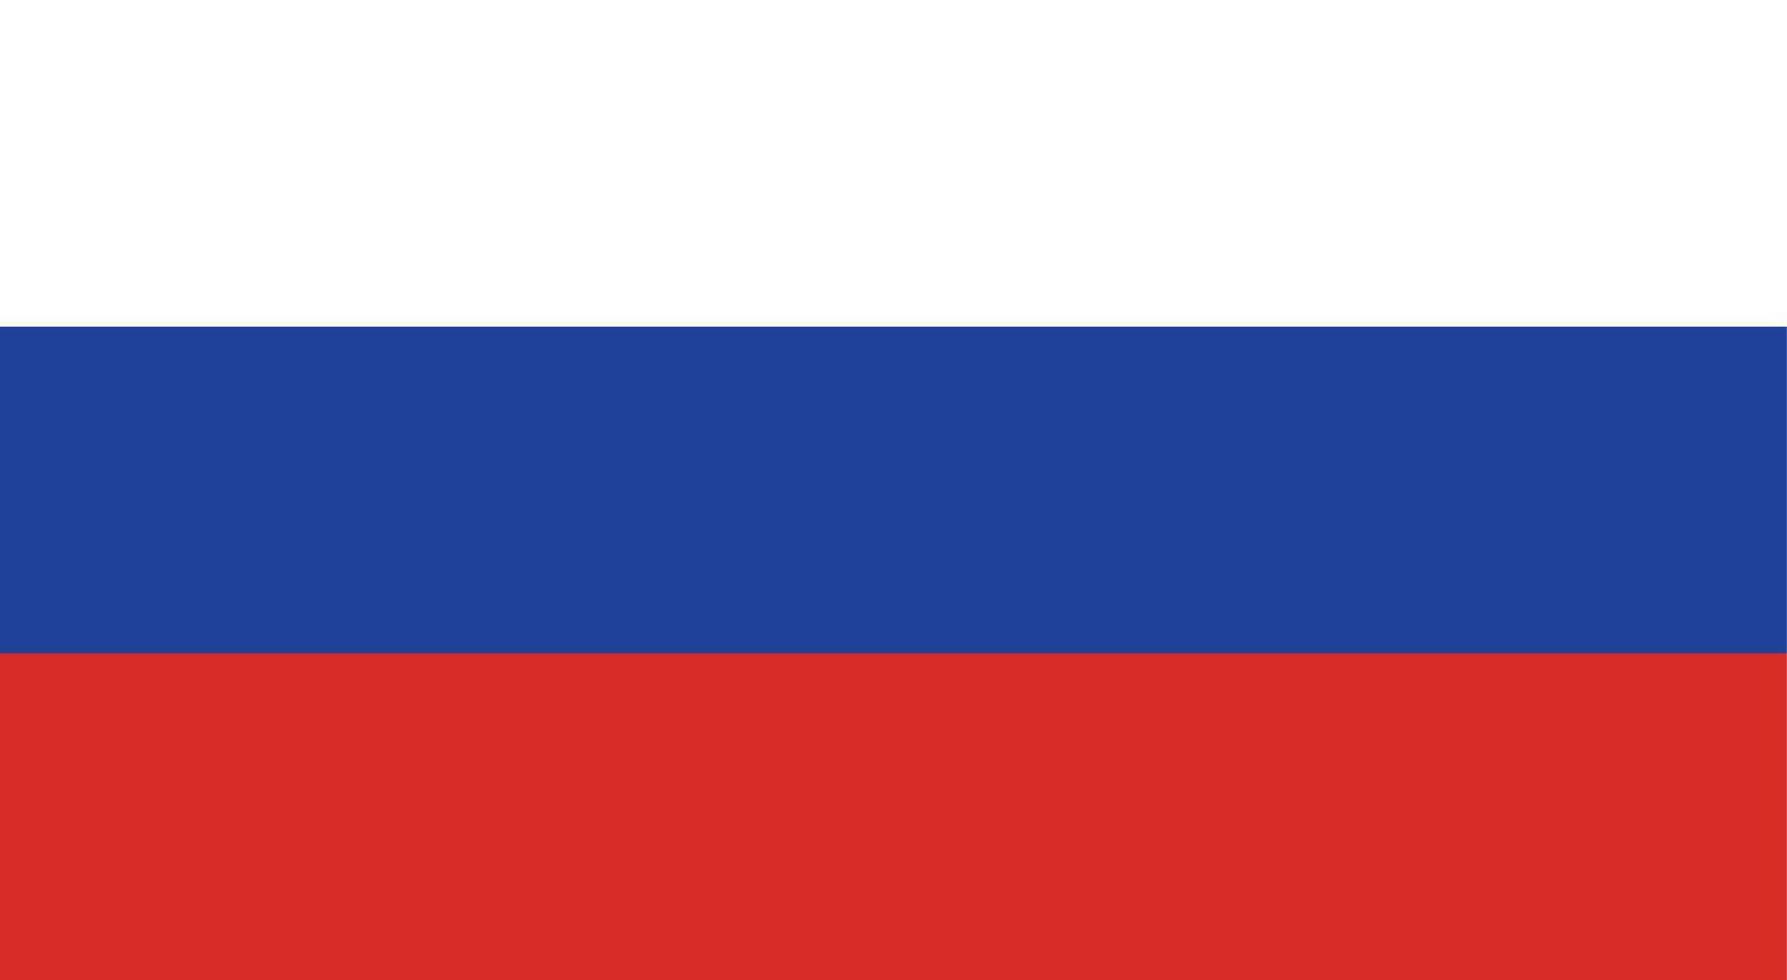 Russia flag national emblem graphic element Illustration template design vector